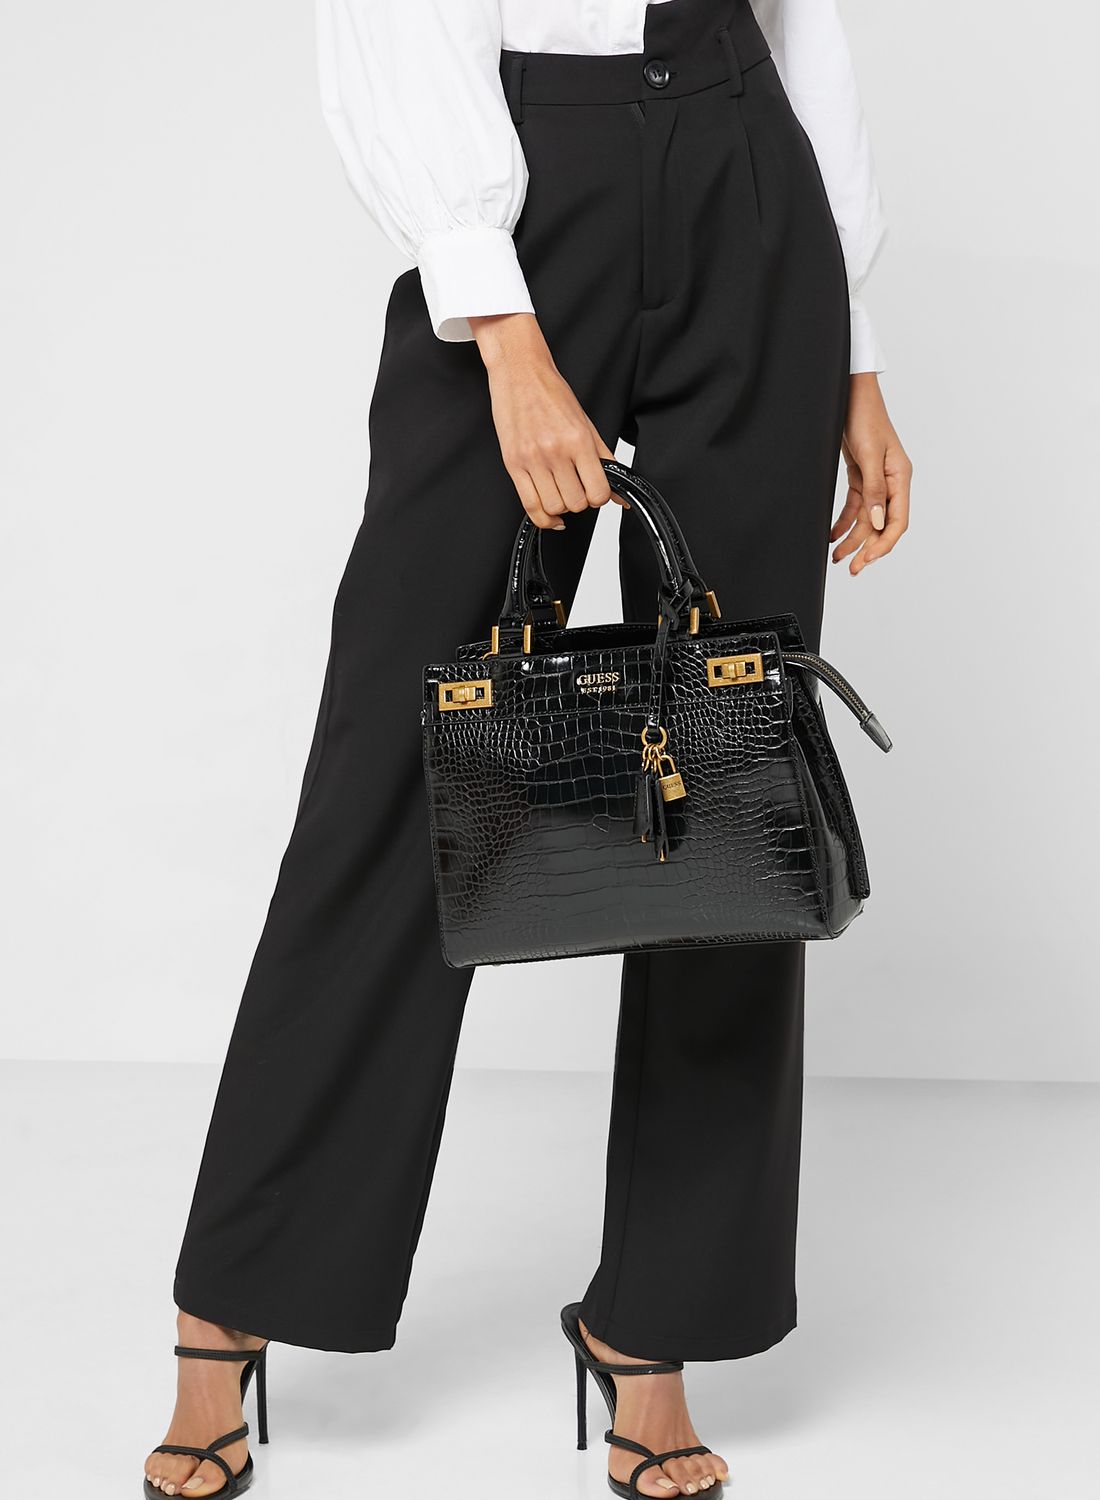 Guess Katey Luxury Satchel Bag